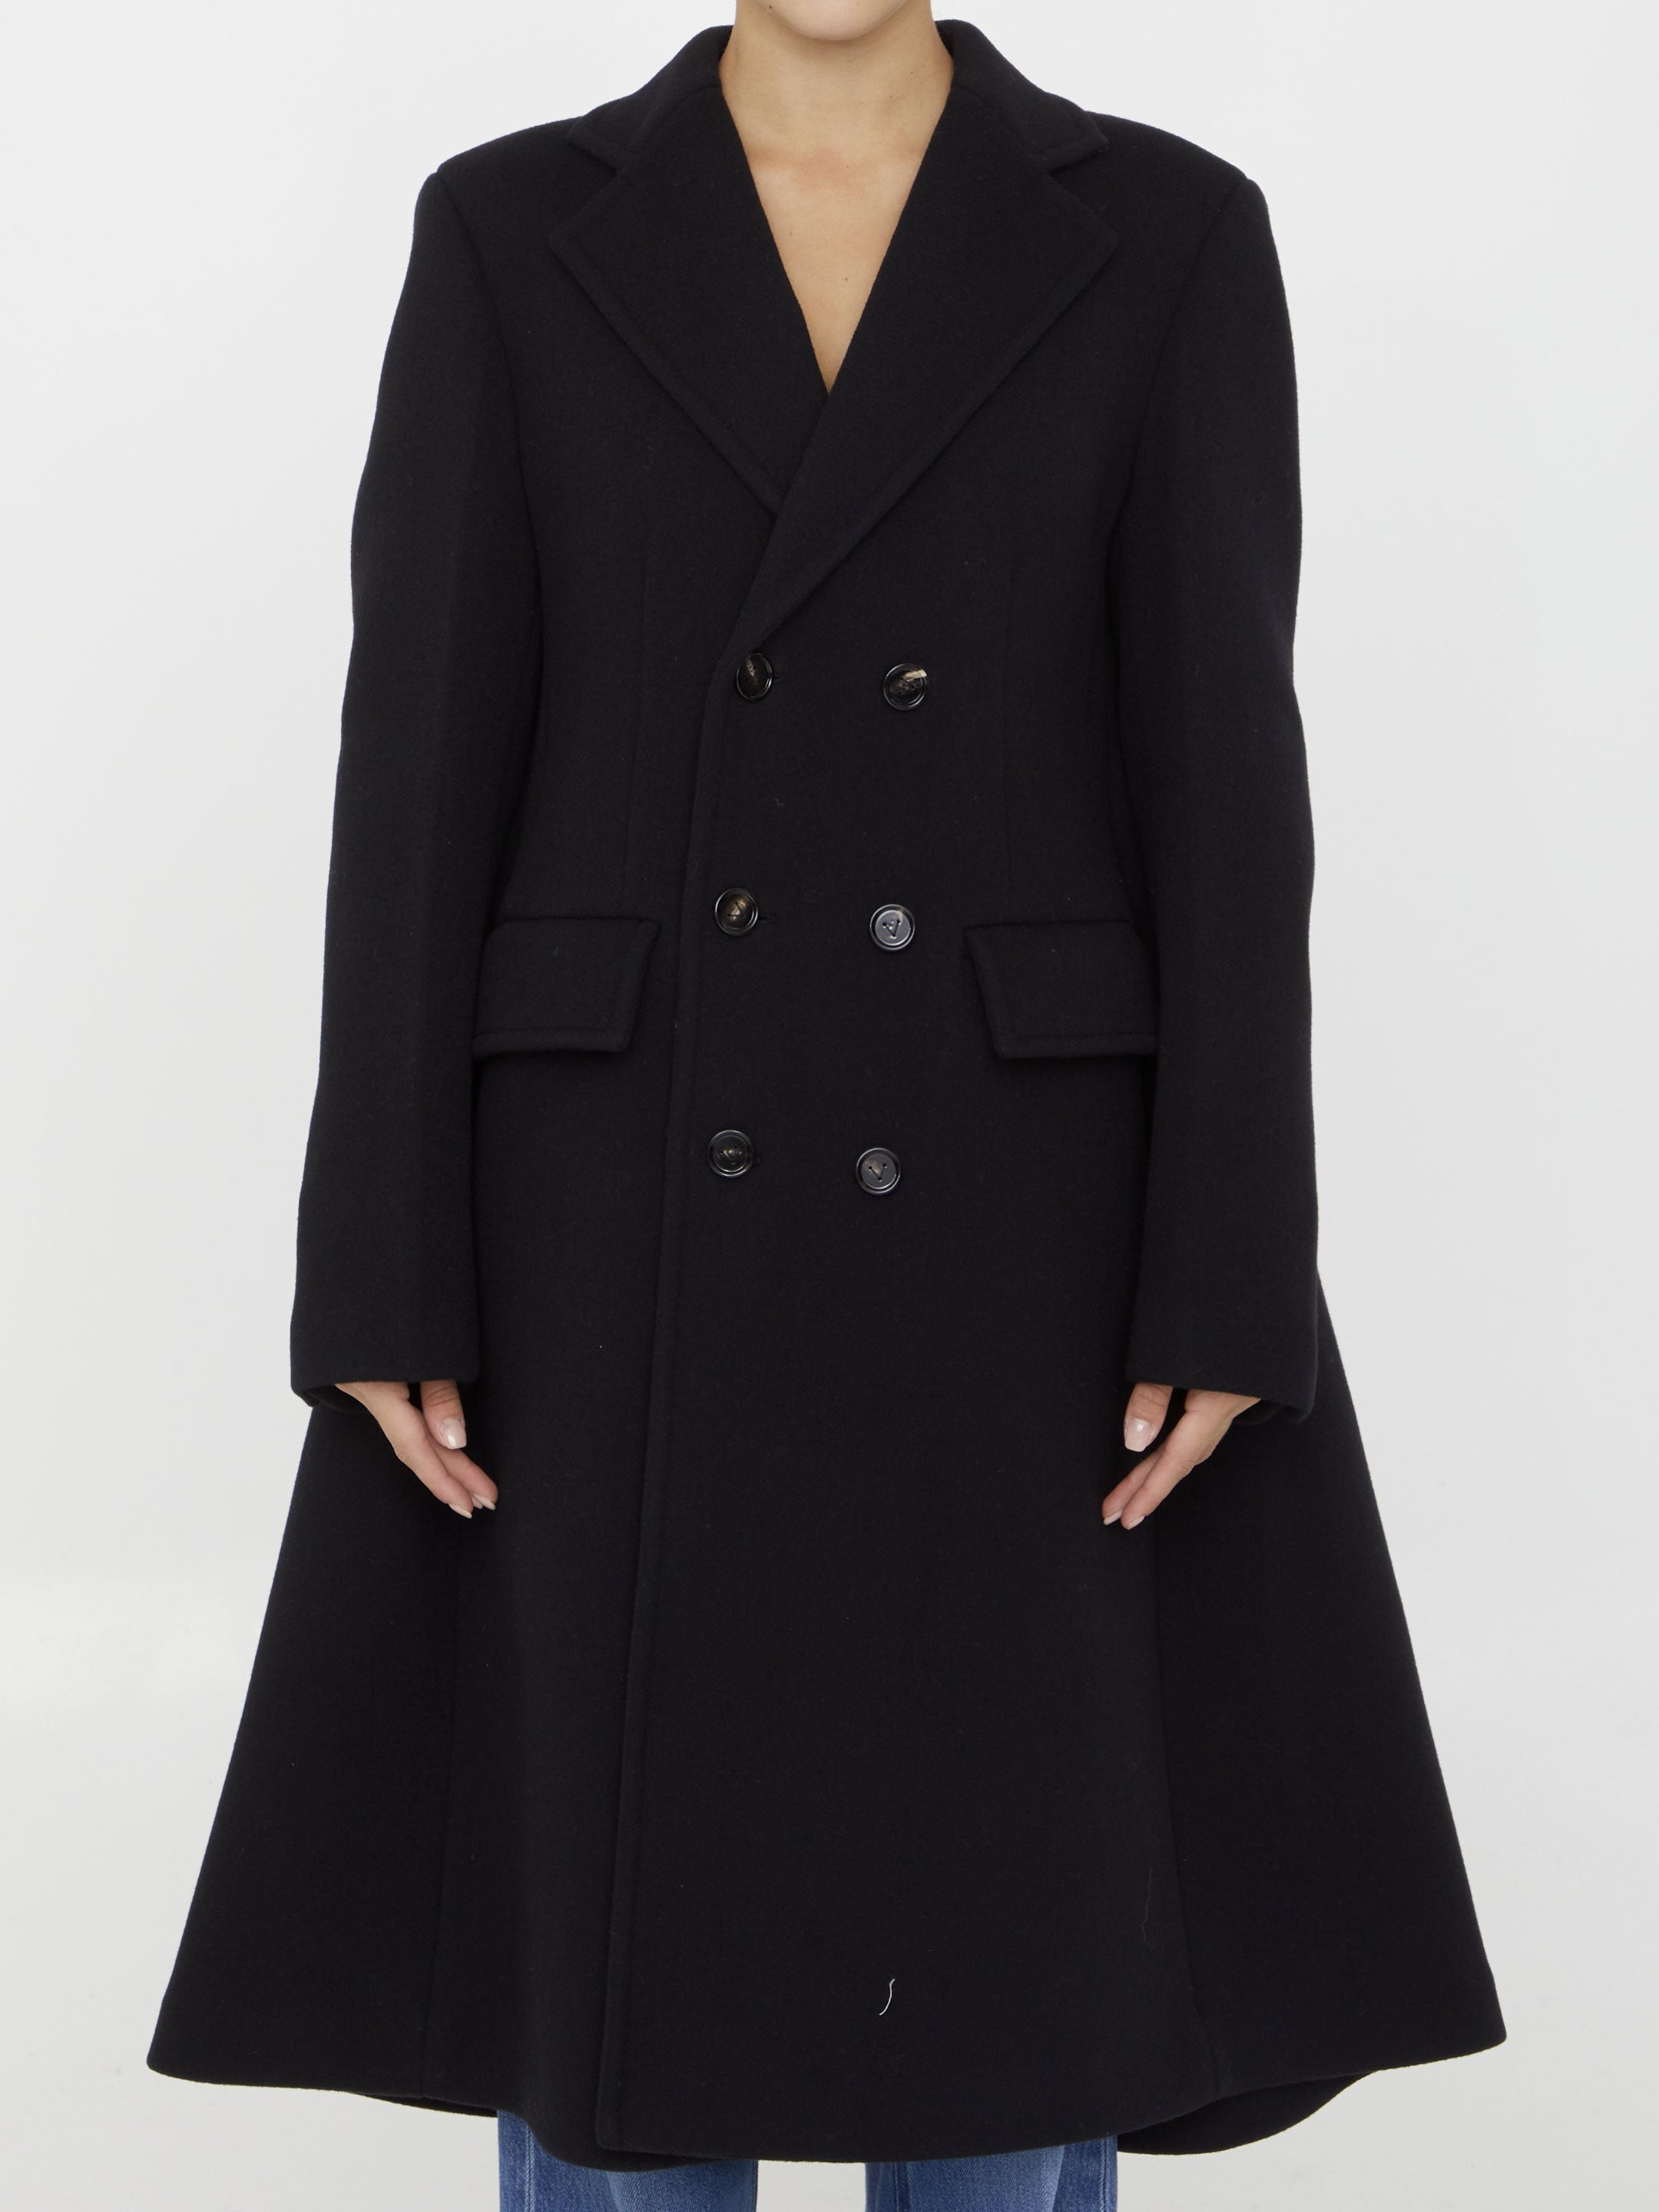 BOTTEGA-VENETA-OUTLET-SALE-Wool-and-cashmere-coat-Jacken-Mantel-40-BLACK-ARCHIVE-COLLECTION.jpg